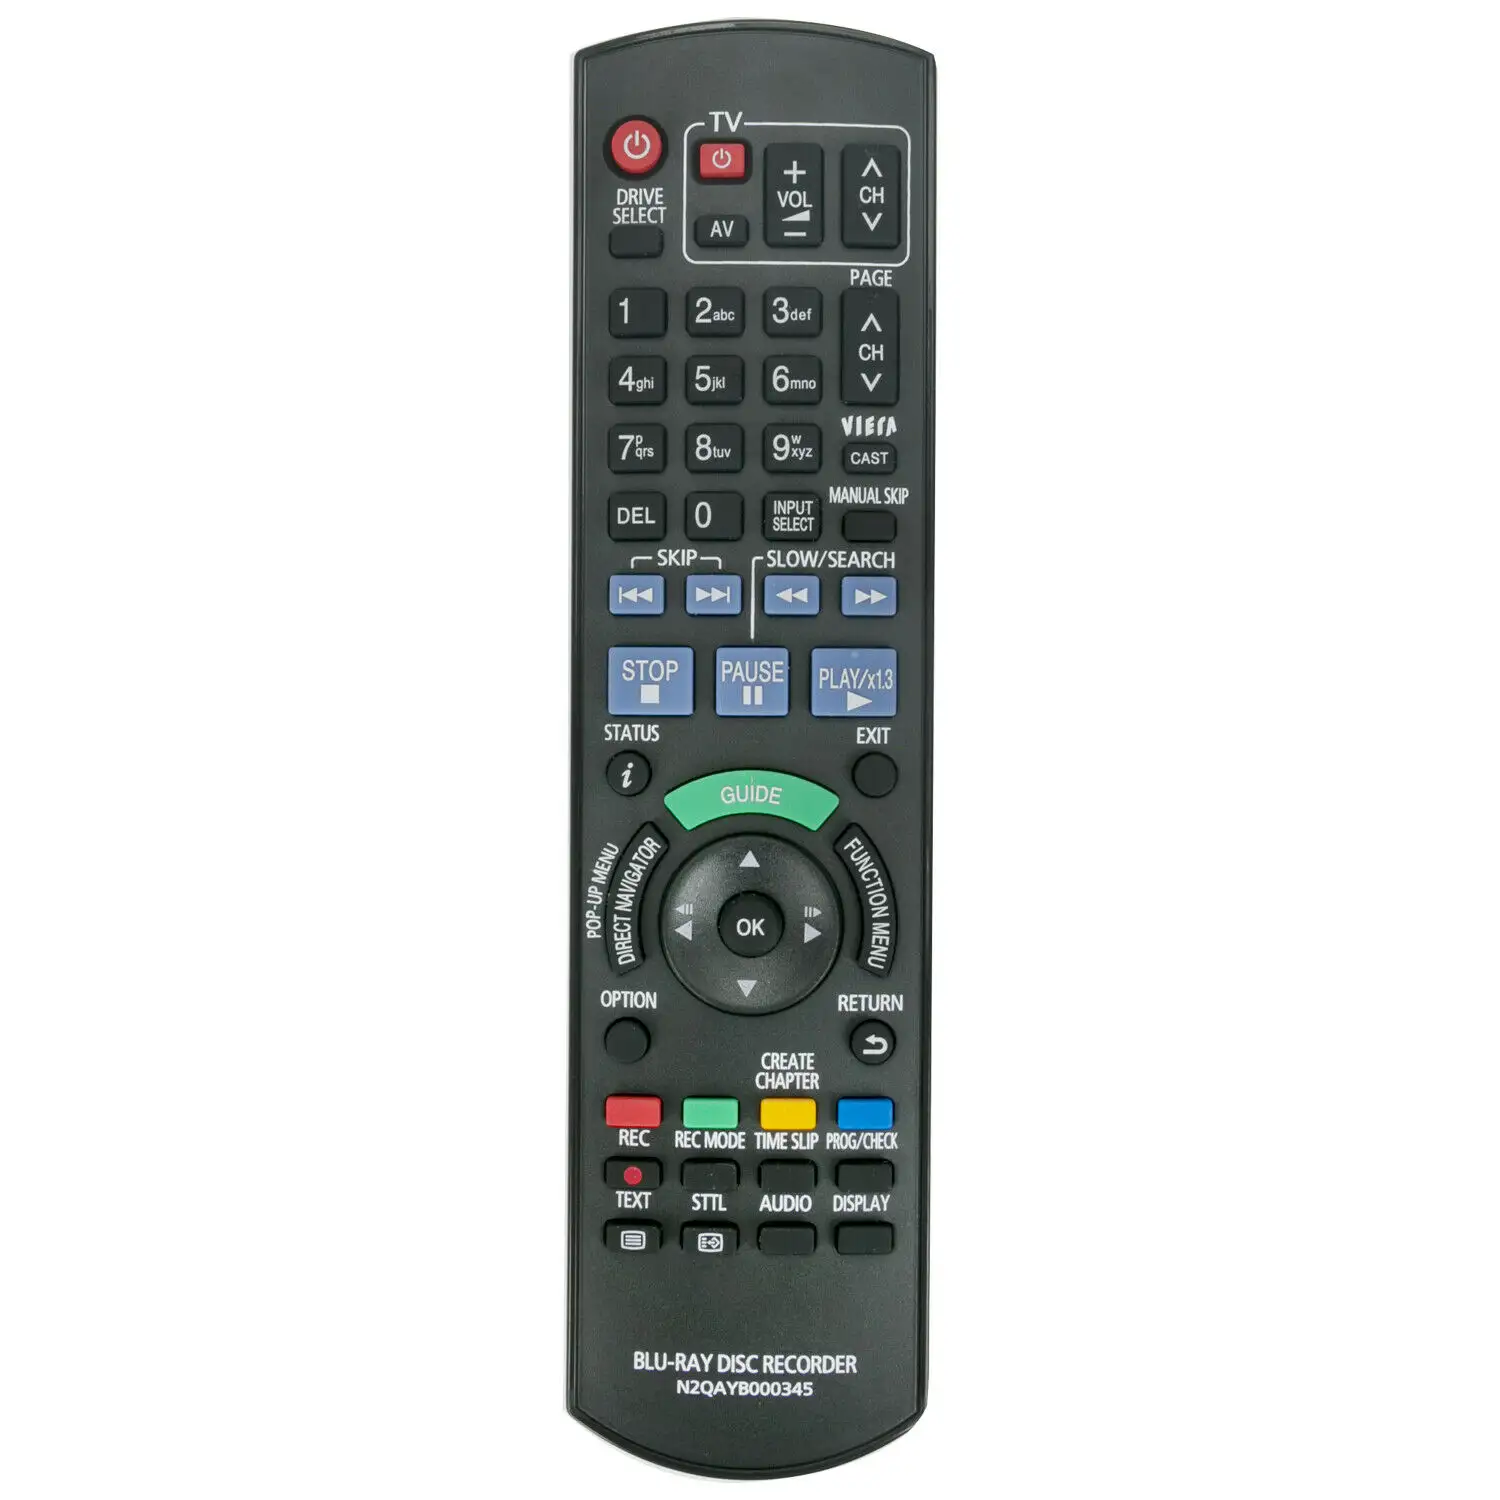 Gaxever Preço de Fábrica Trabalho Para DVD Blu-Ray Recorder DMR-BW750 DMRBW850GL N2QAYB000345 Universal Controle Remoto